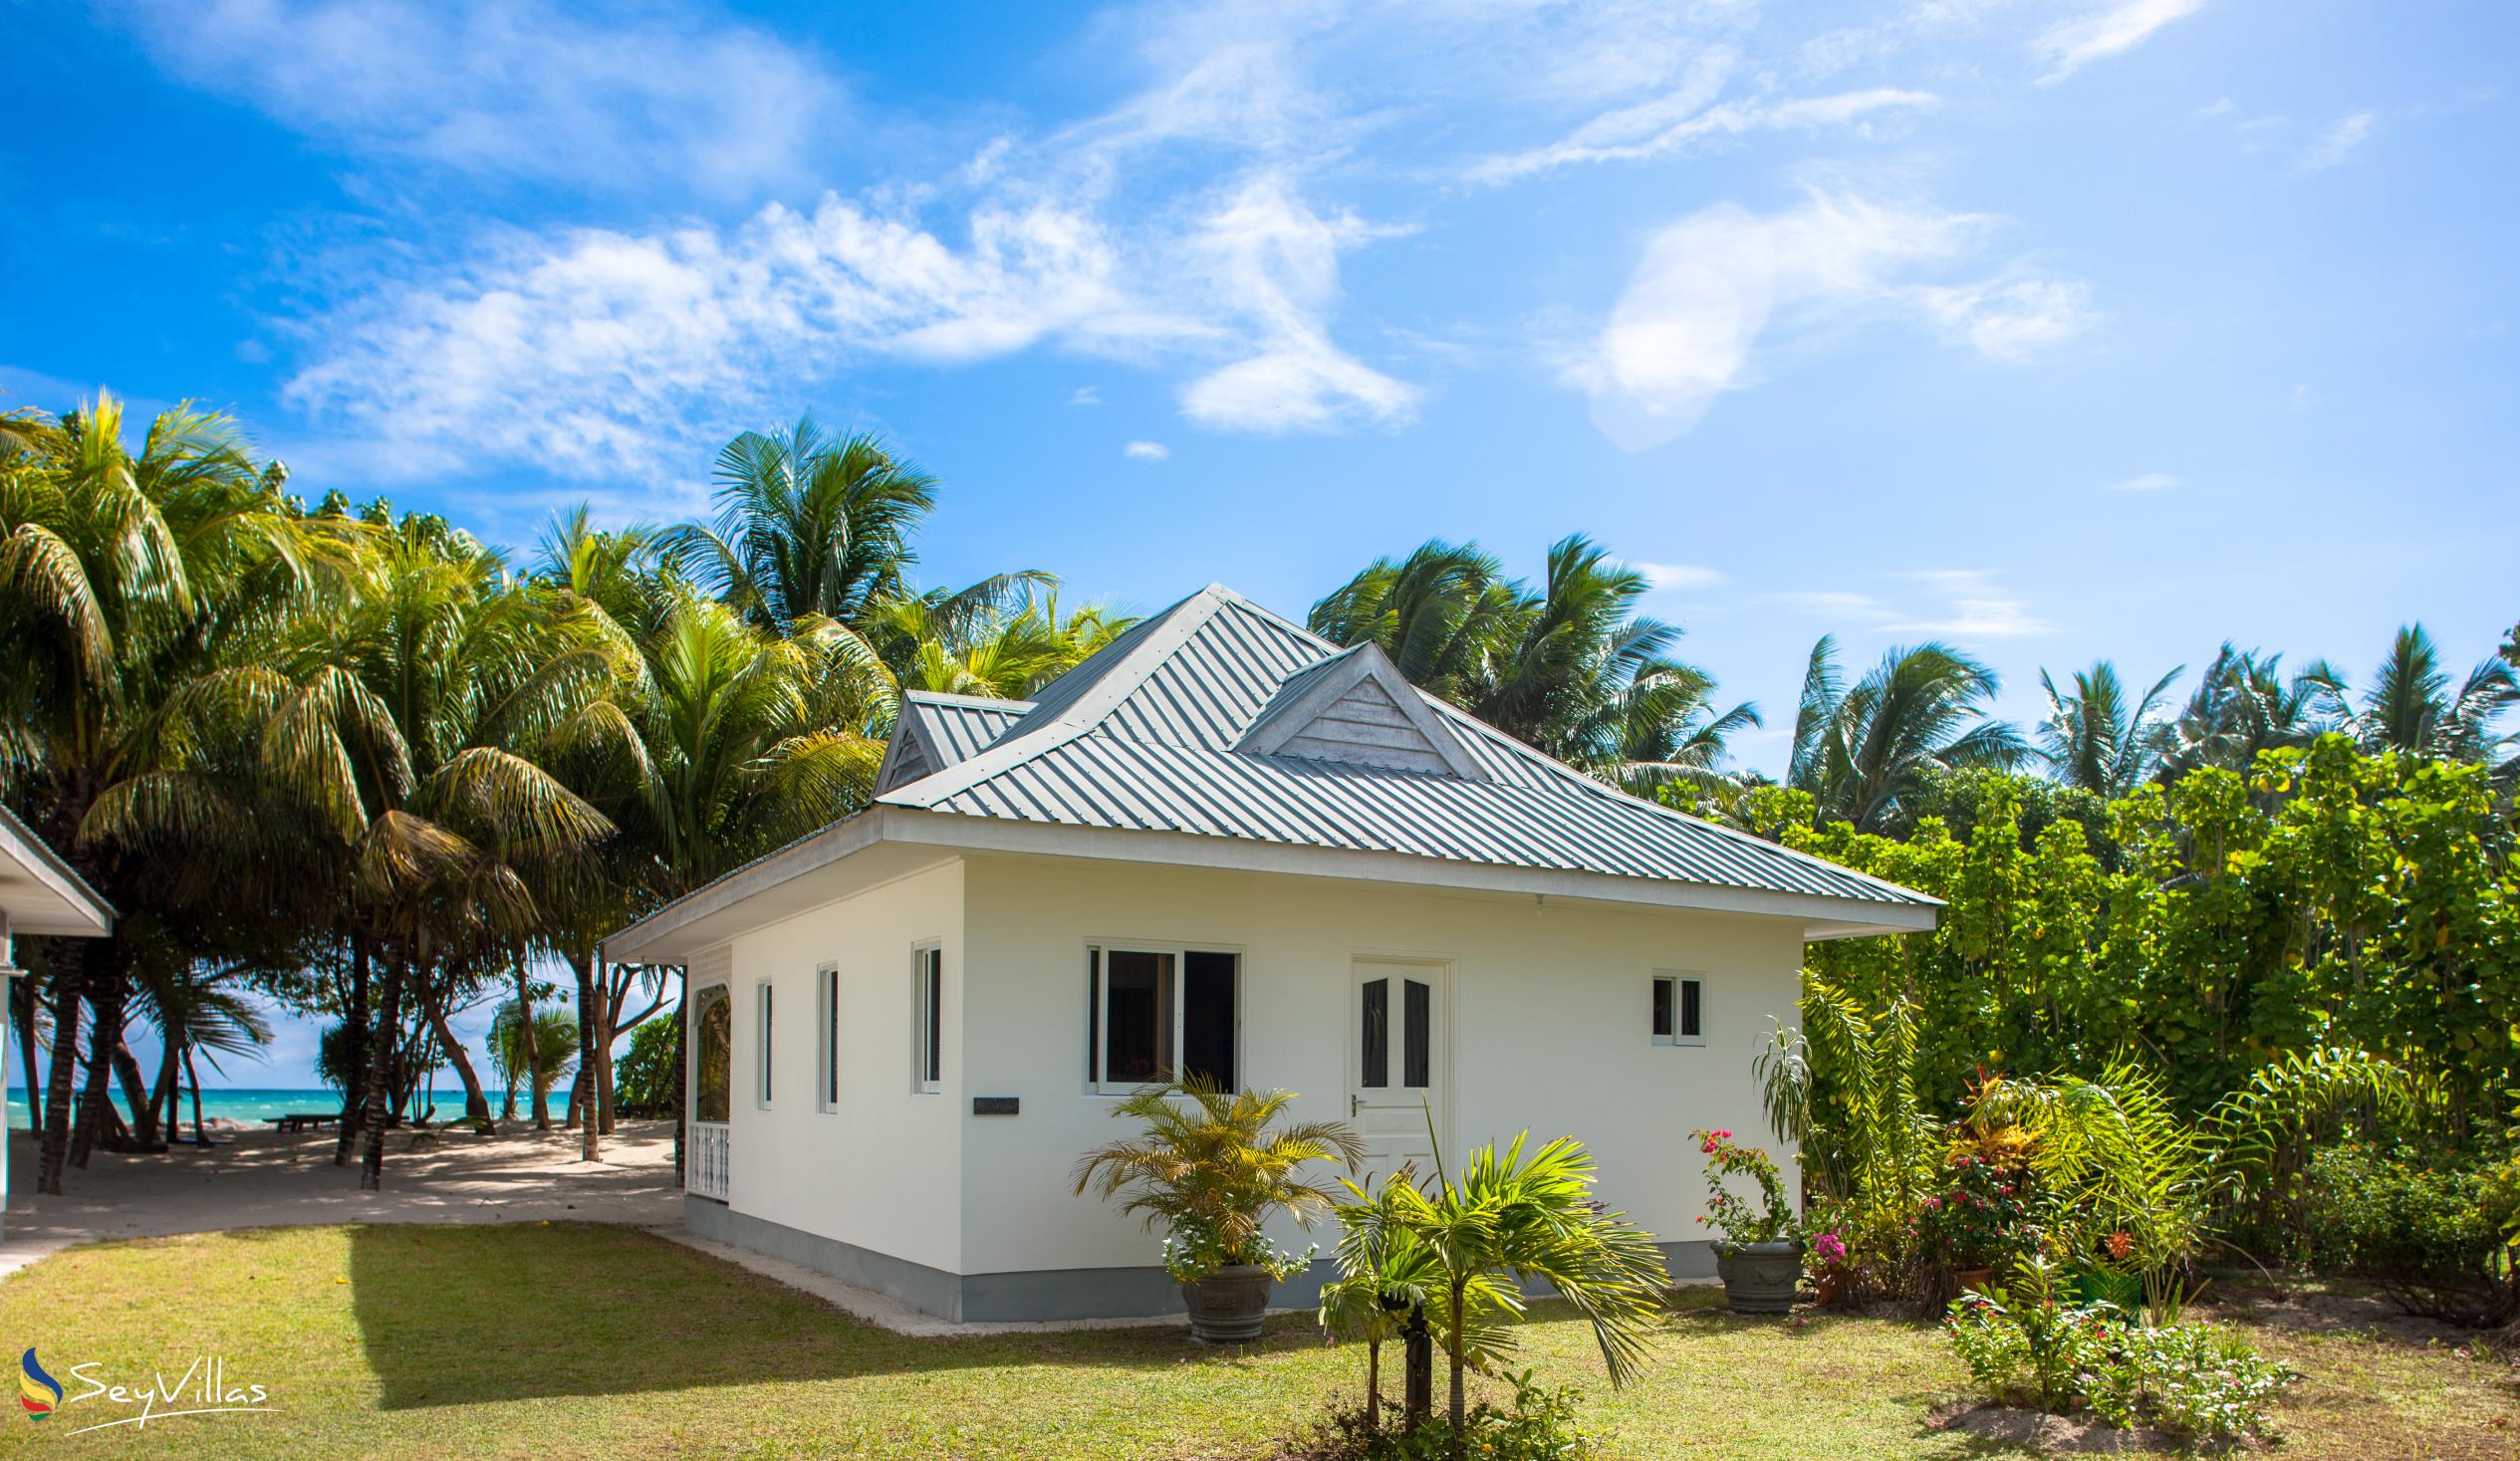 Photo 1: Cap Jean Marie Beach Villas - Outdoor area - Praslin (Seychelles)